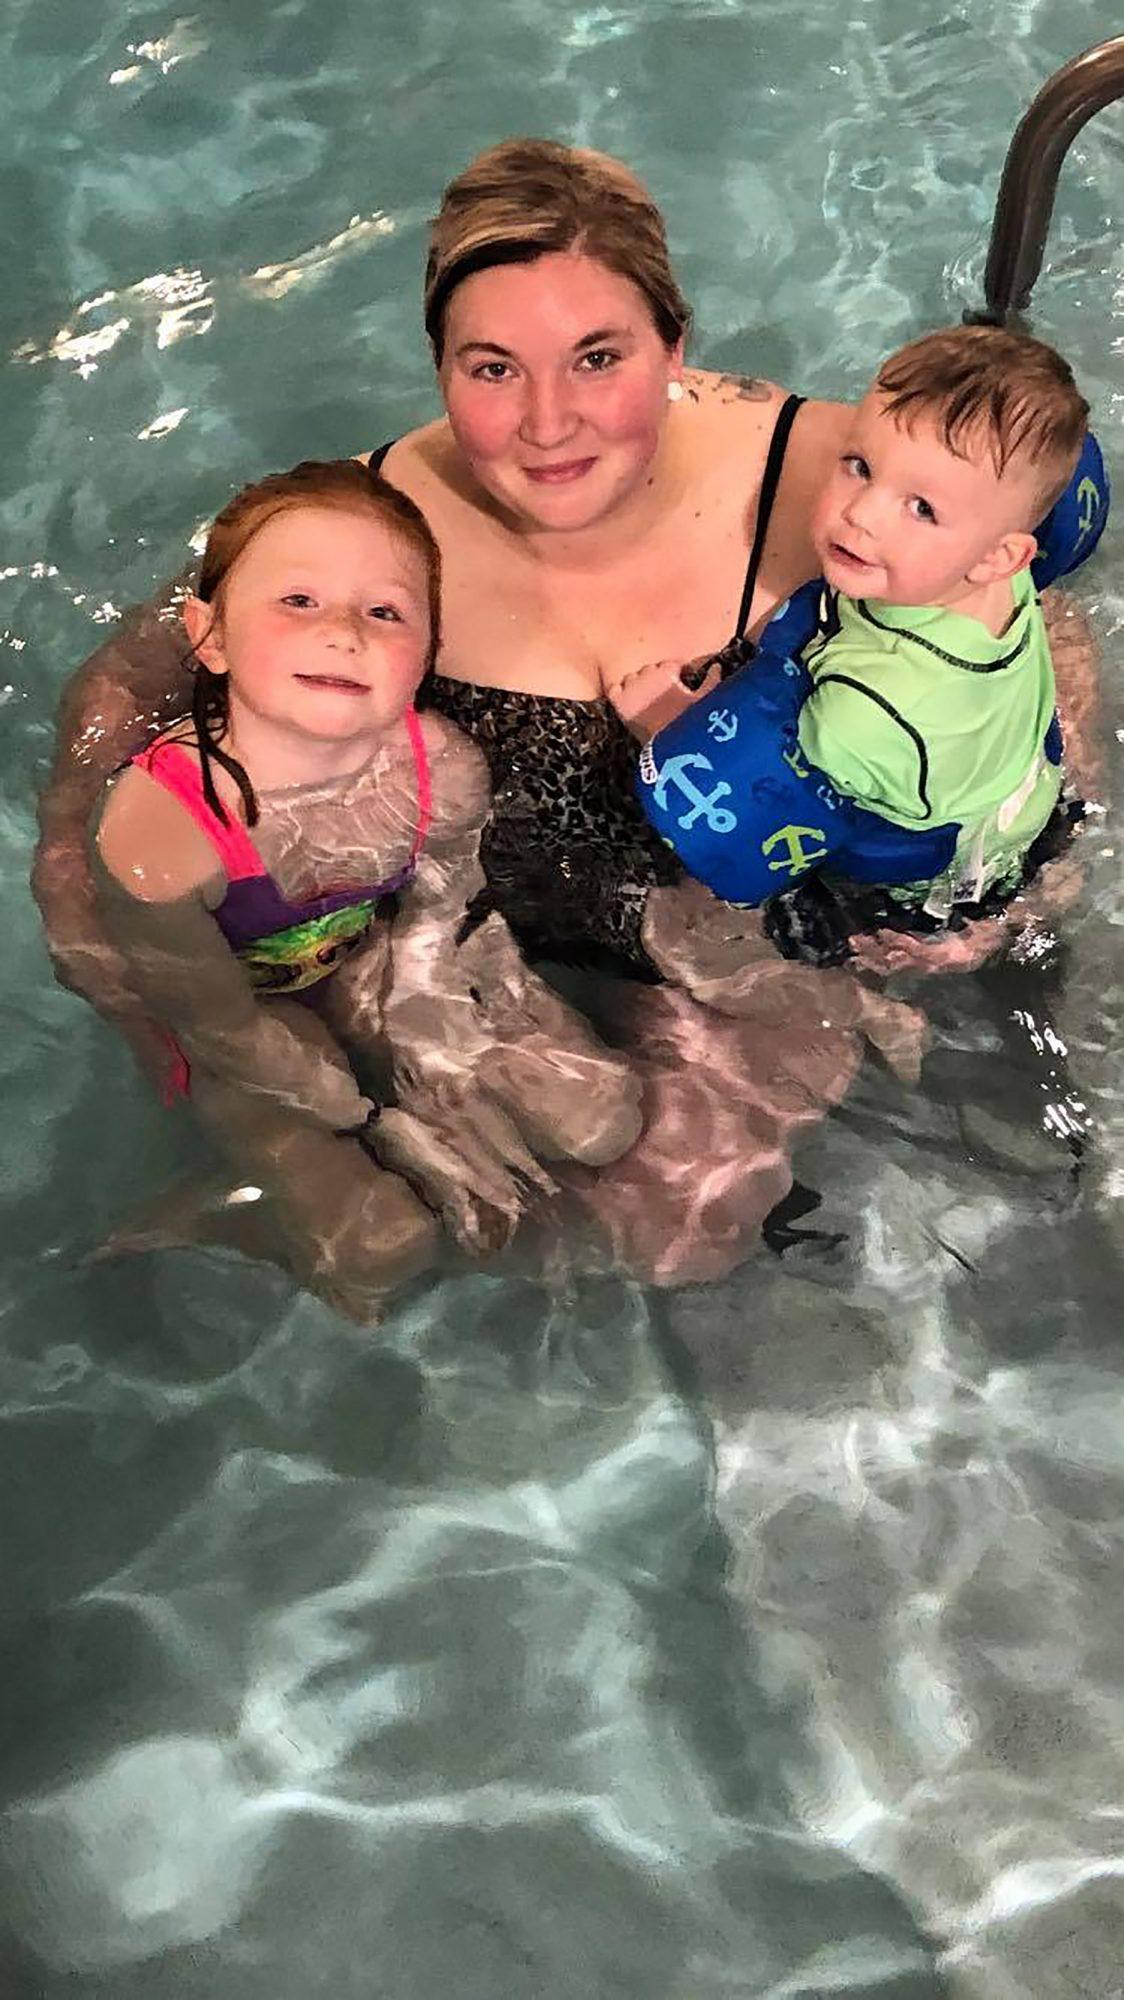 Lurking bacteria gave an Indiana mom 'hot tub rash'. She nearly lost her leg